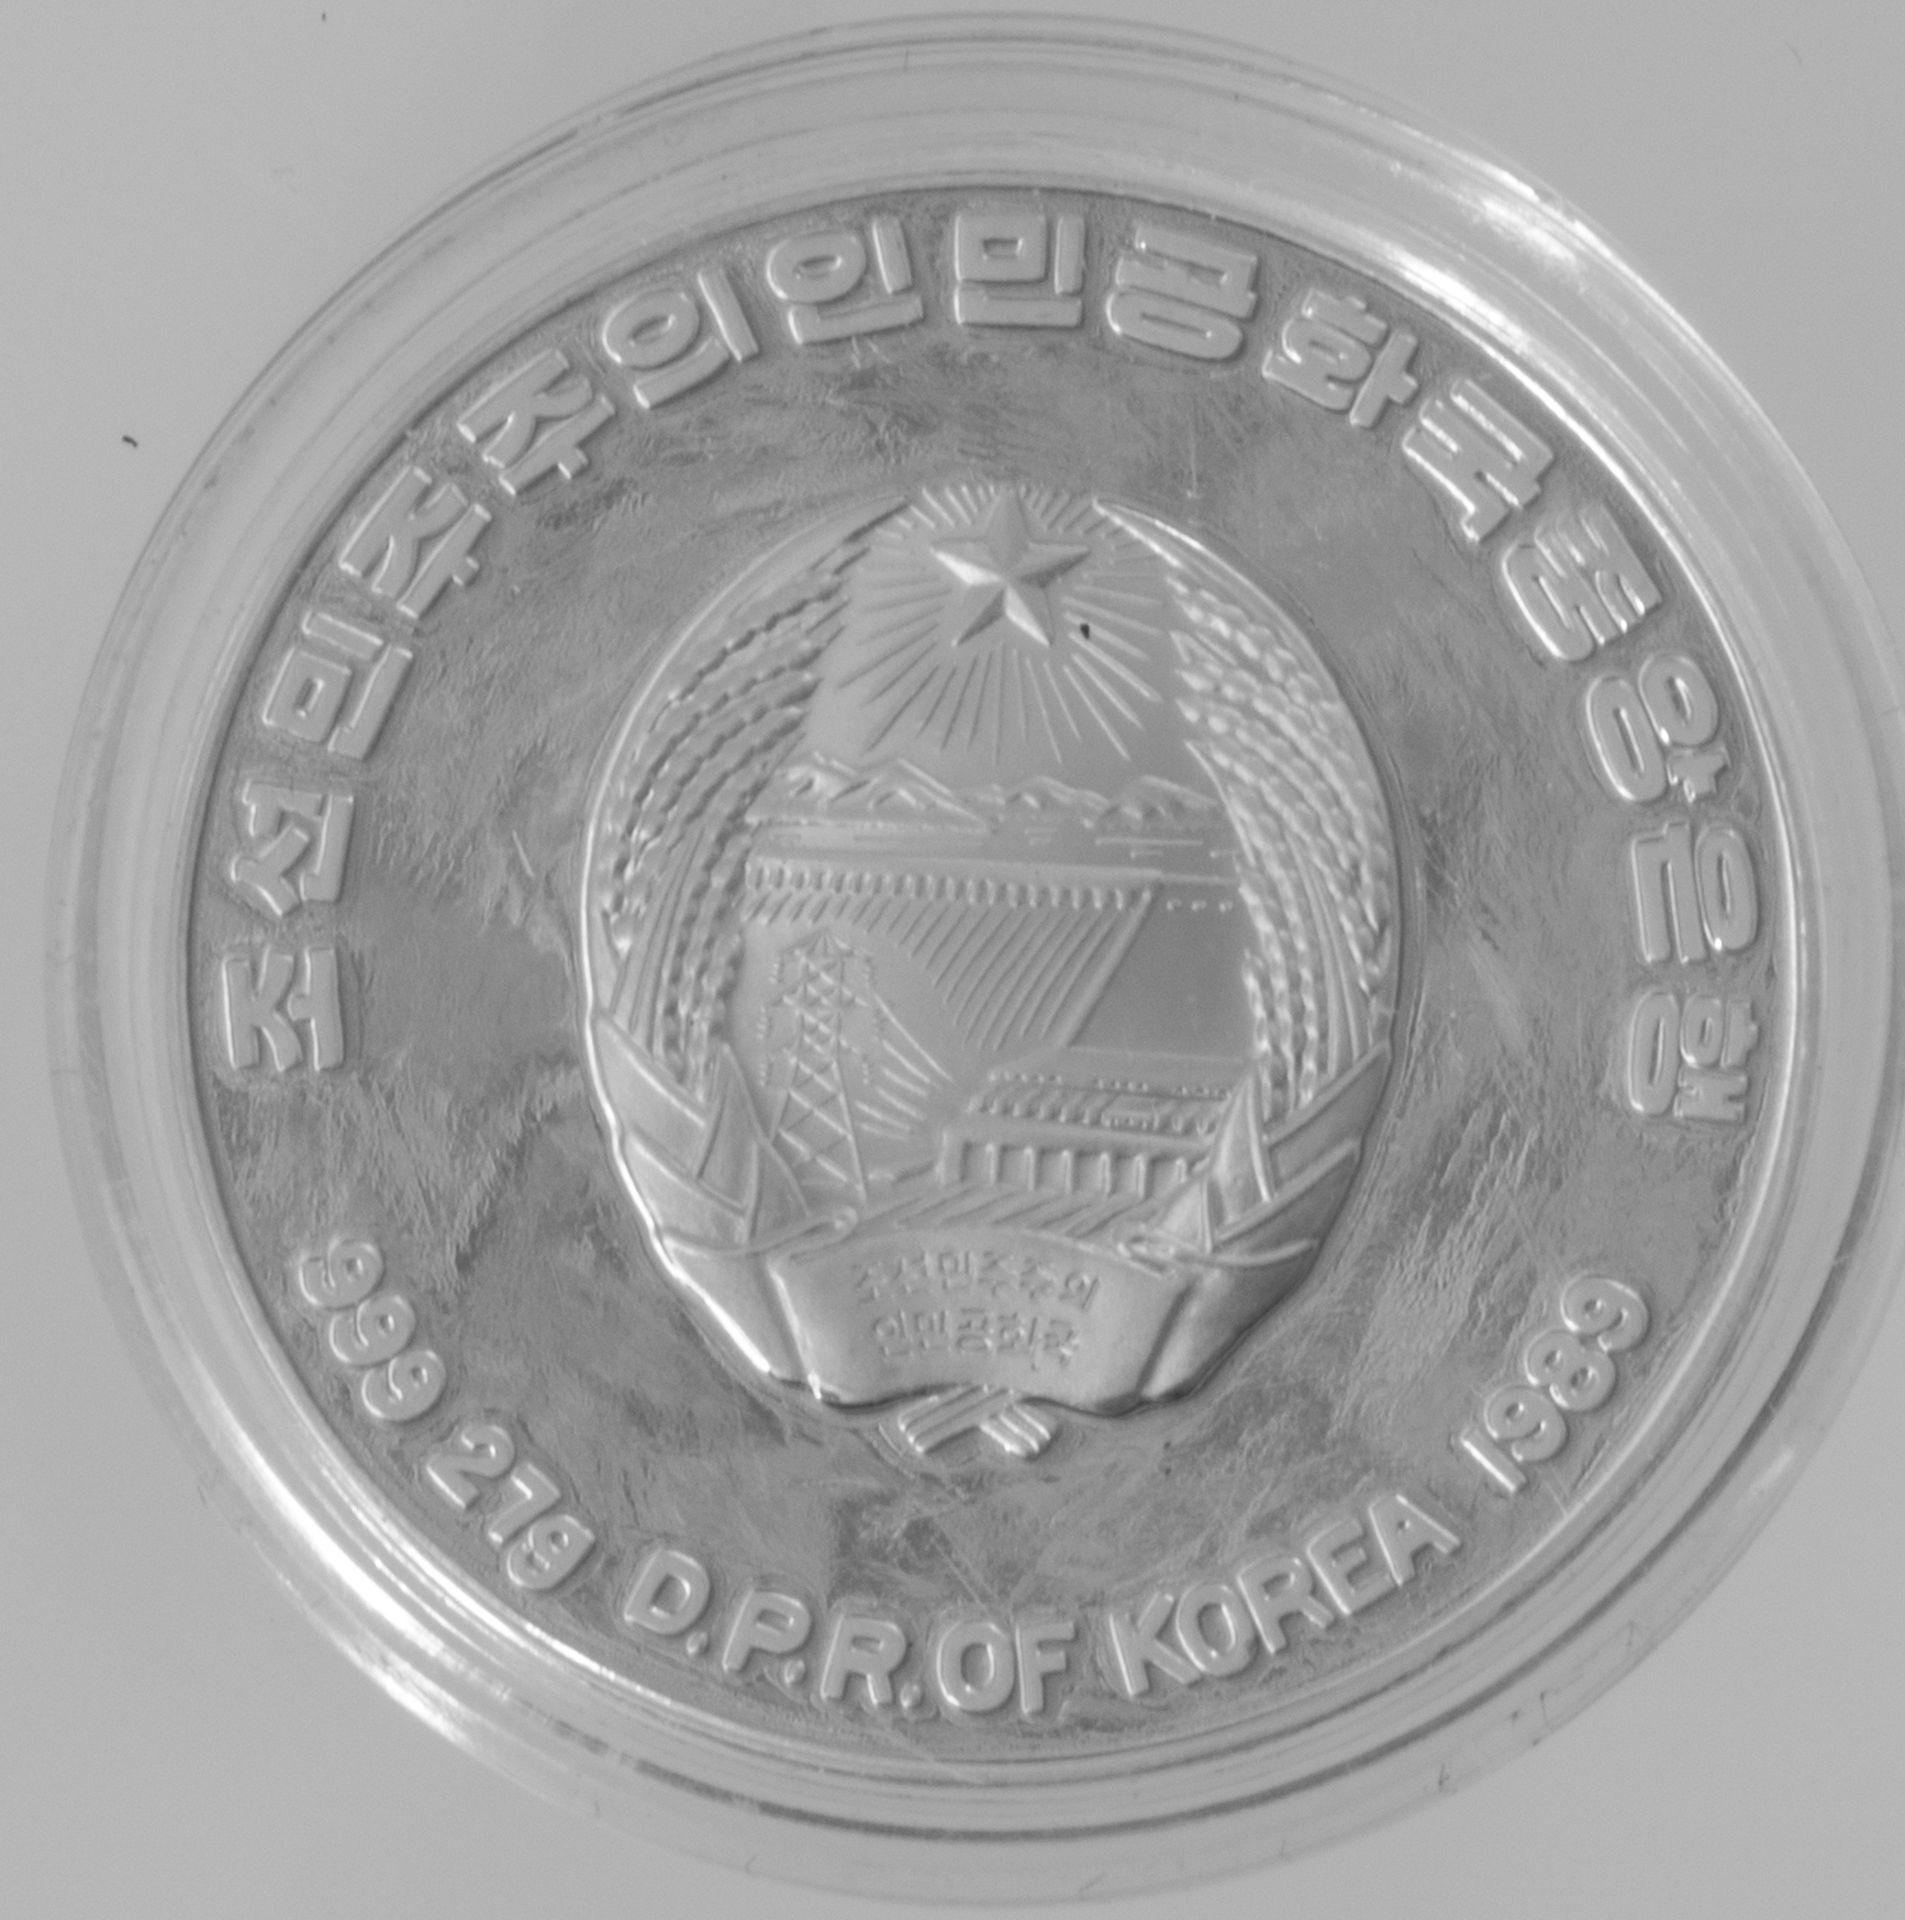 Nord Korea 1989, 500 Won - Silbermünze "Fußball WM 1990". KM 20/38. Erhaltung: PP. In Kapsel. - Image 2 of 2